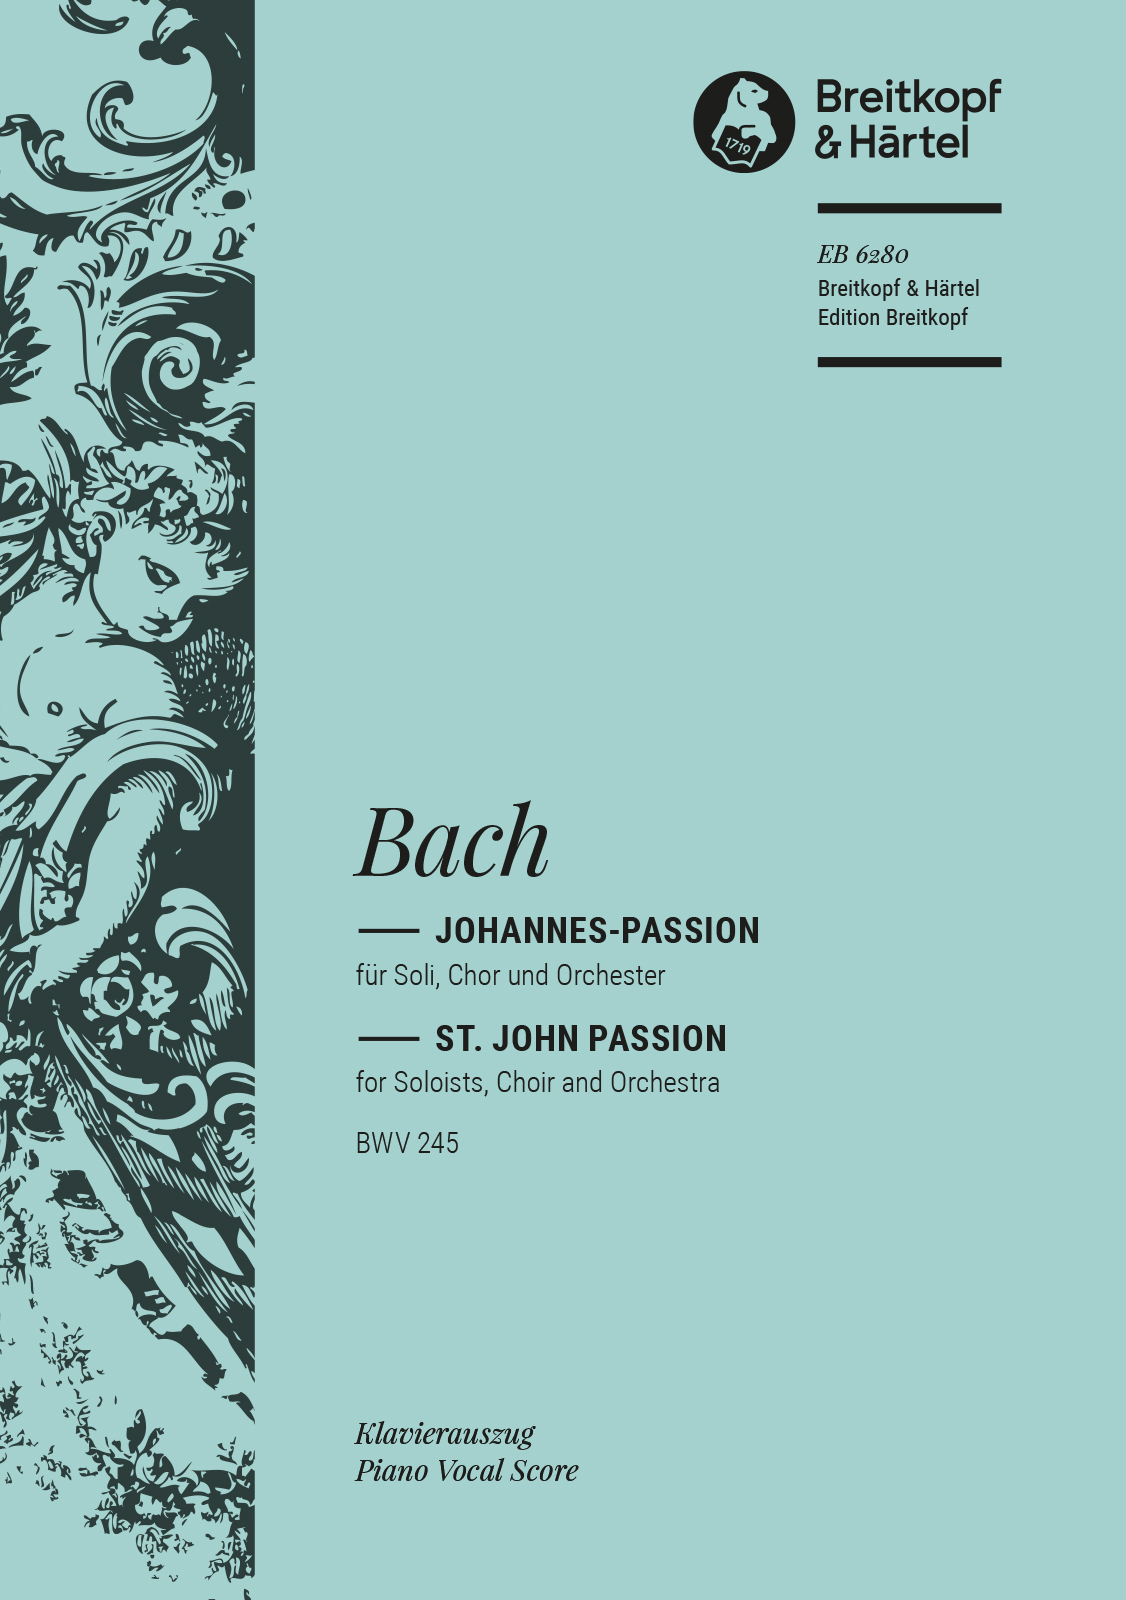 J. S. Bach - JOHANNES-PASSION FÜR SOLI, CHOR UND ORCHESTER BWV 245, KLAVIERAUSZUG